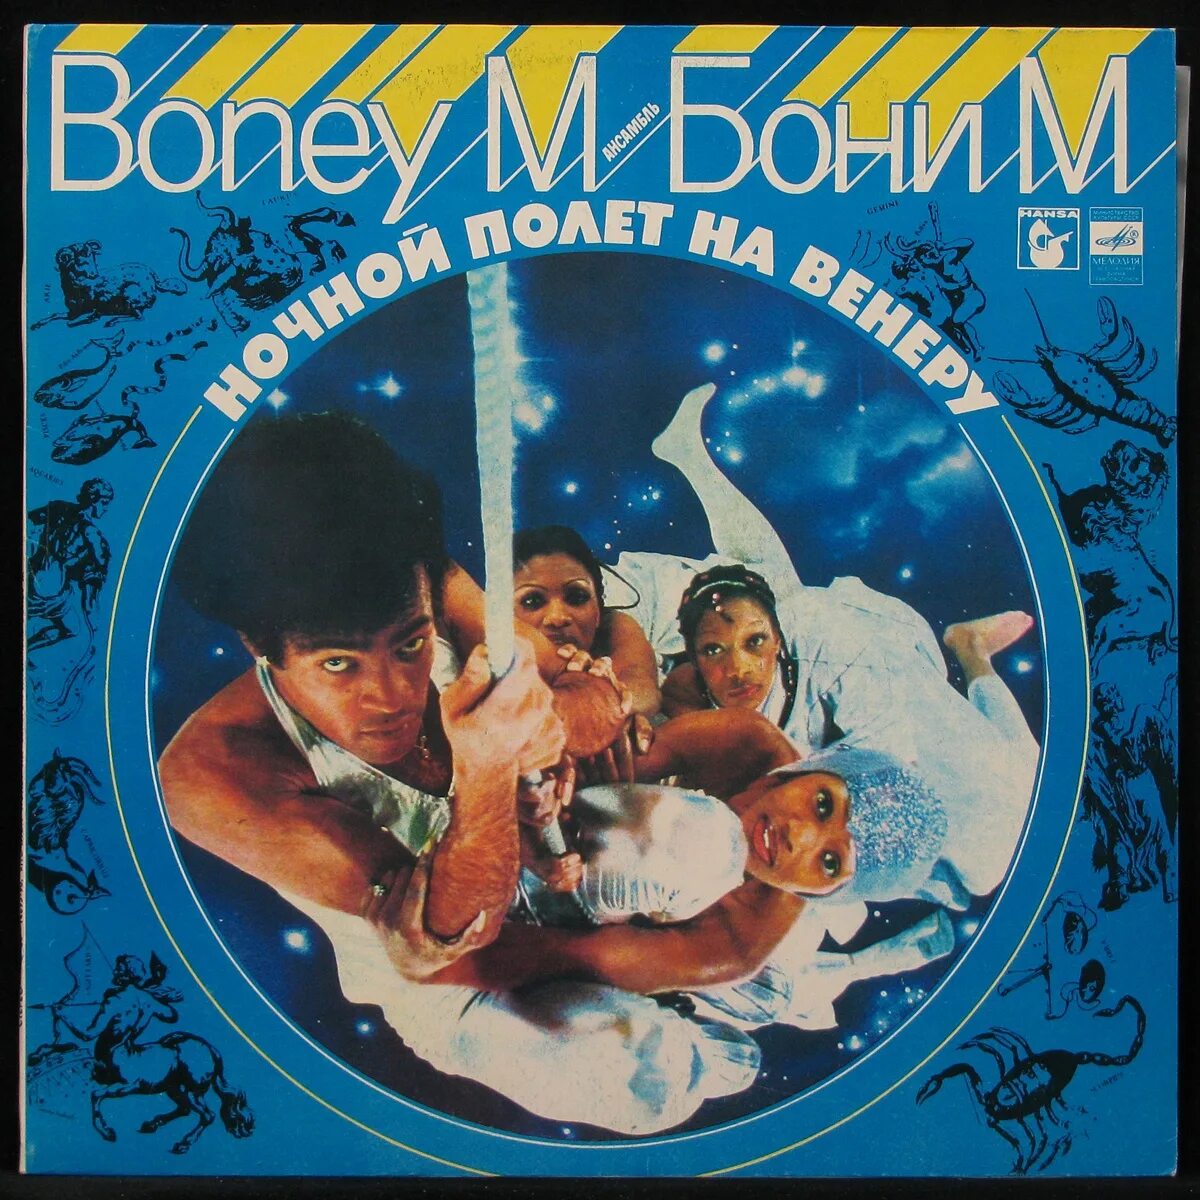 Boney m Venus Nightflight LP. Boney m Nightflight to Venus 1978 пластинки. Boney m пластинка. Бони м. ночной полет на Венеру ("мелодия", с60-14895-96] 1980) обложка. Boney m venus